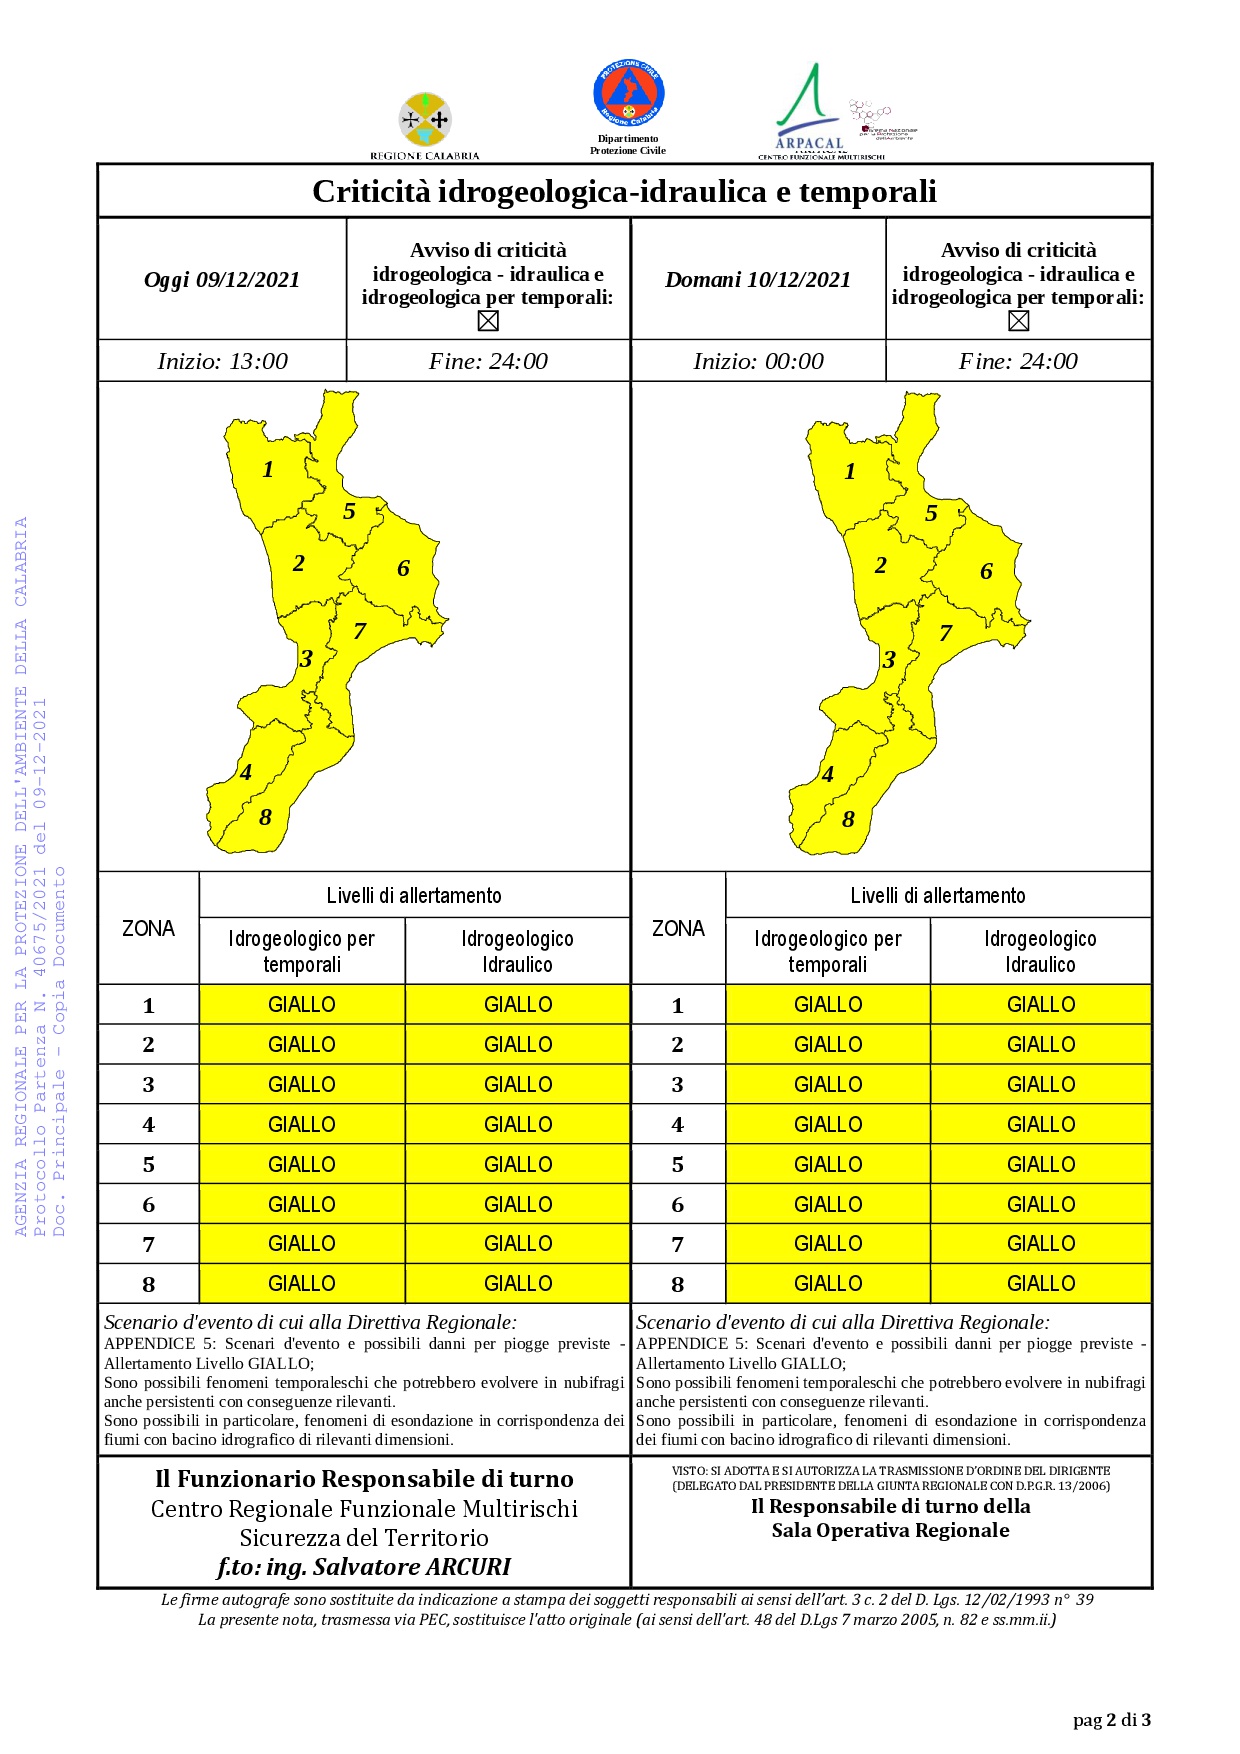 Criticità idrogeologica-idraulica e temporali in Calabria 09-12-2021